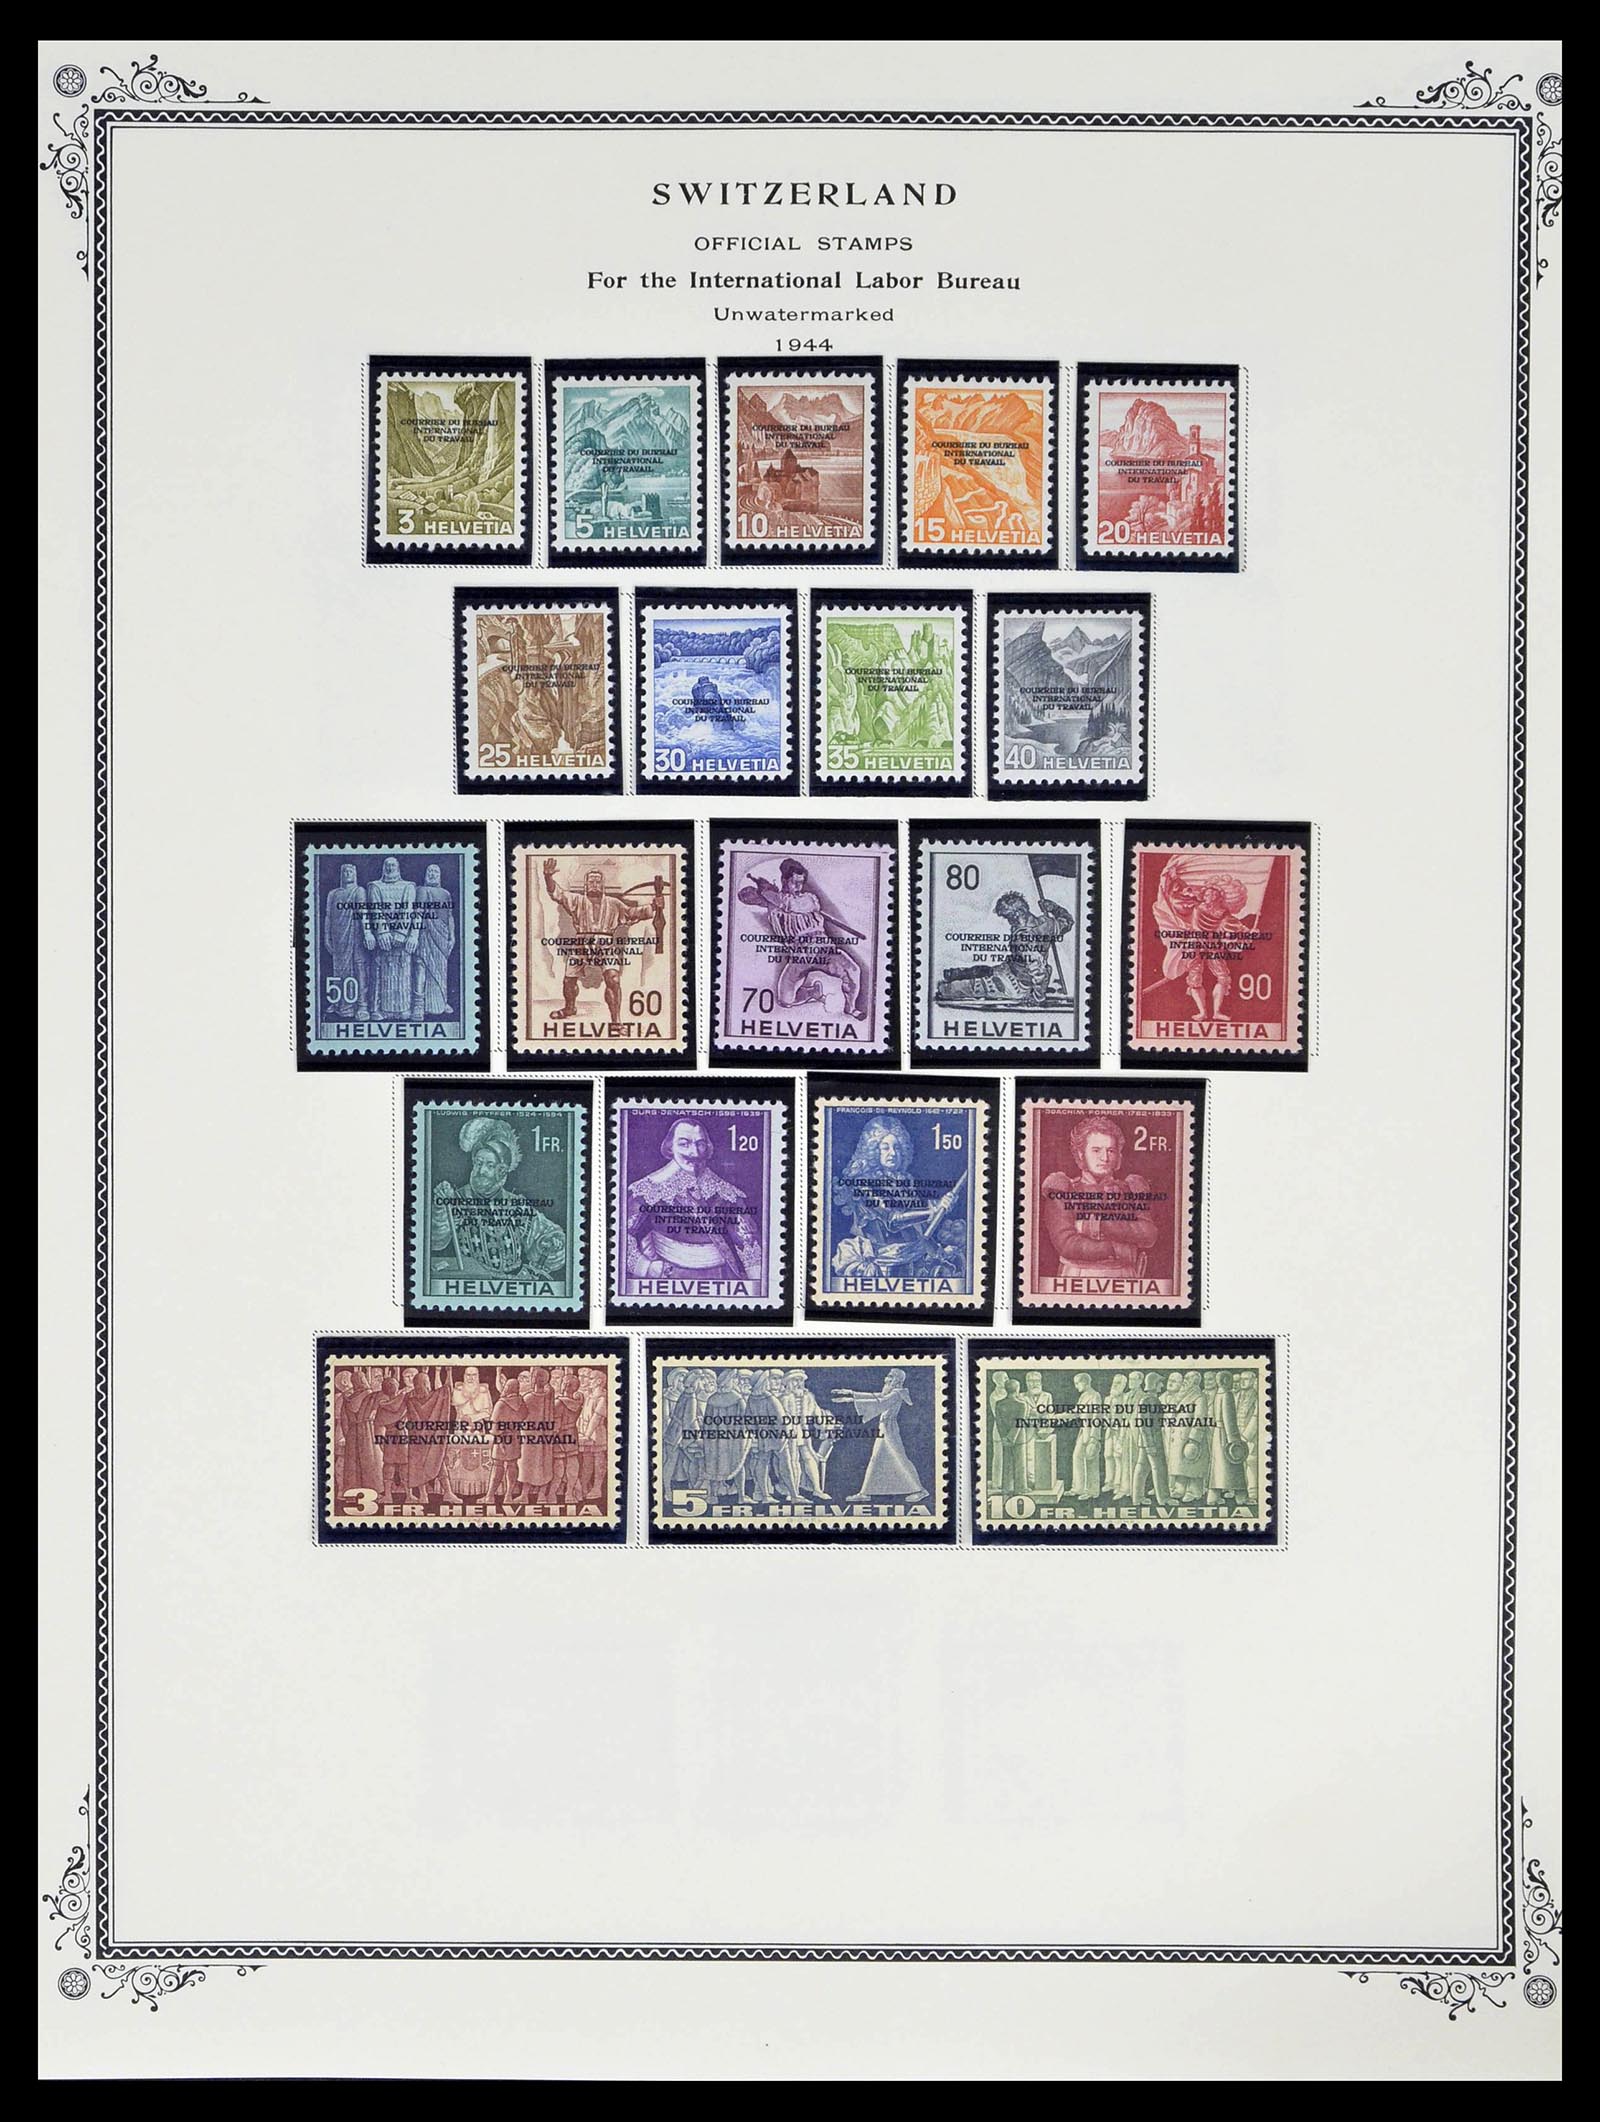 39178 0246 - Stamp collection 39178 Switzerland 1850-1989.